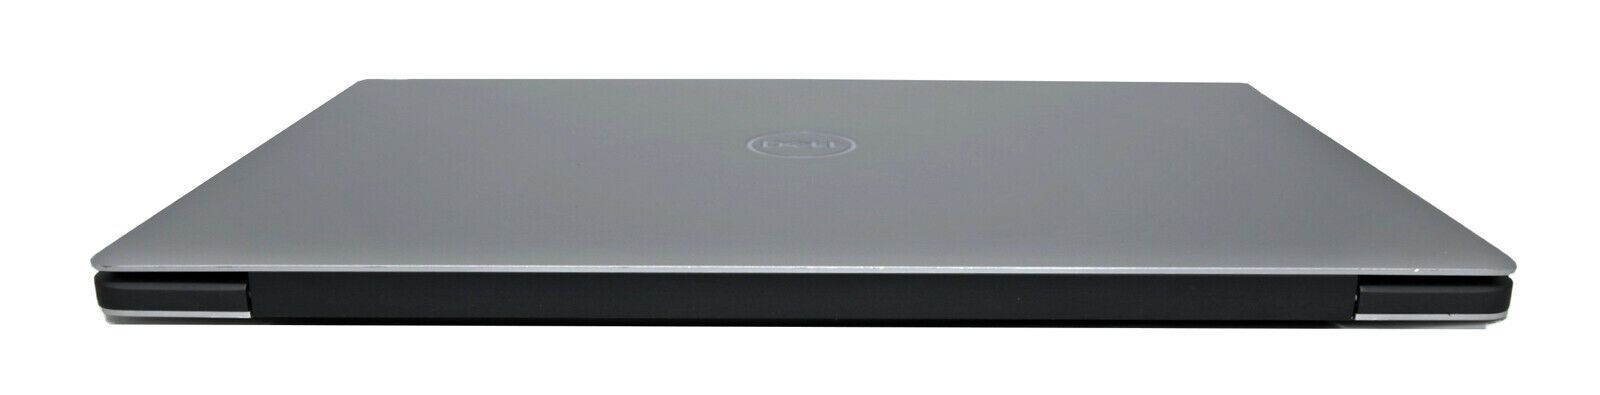 Dell XPS 13 9370 4K UHD UltraBook: Core i7-8550U, 512GB, 16GB RAM, 1.2Kg, VAT - CruiseTech